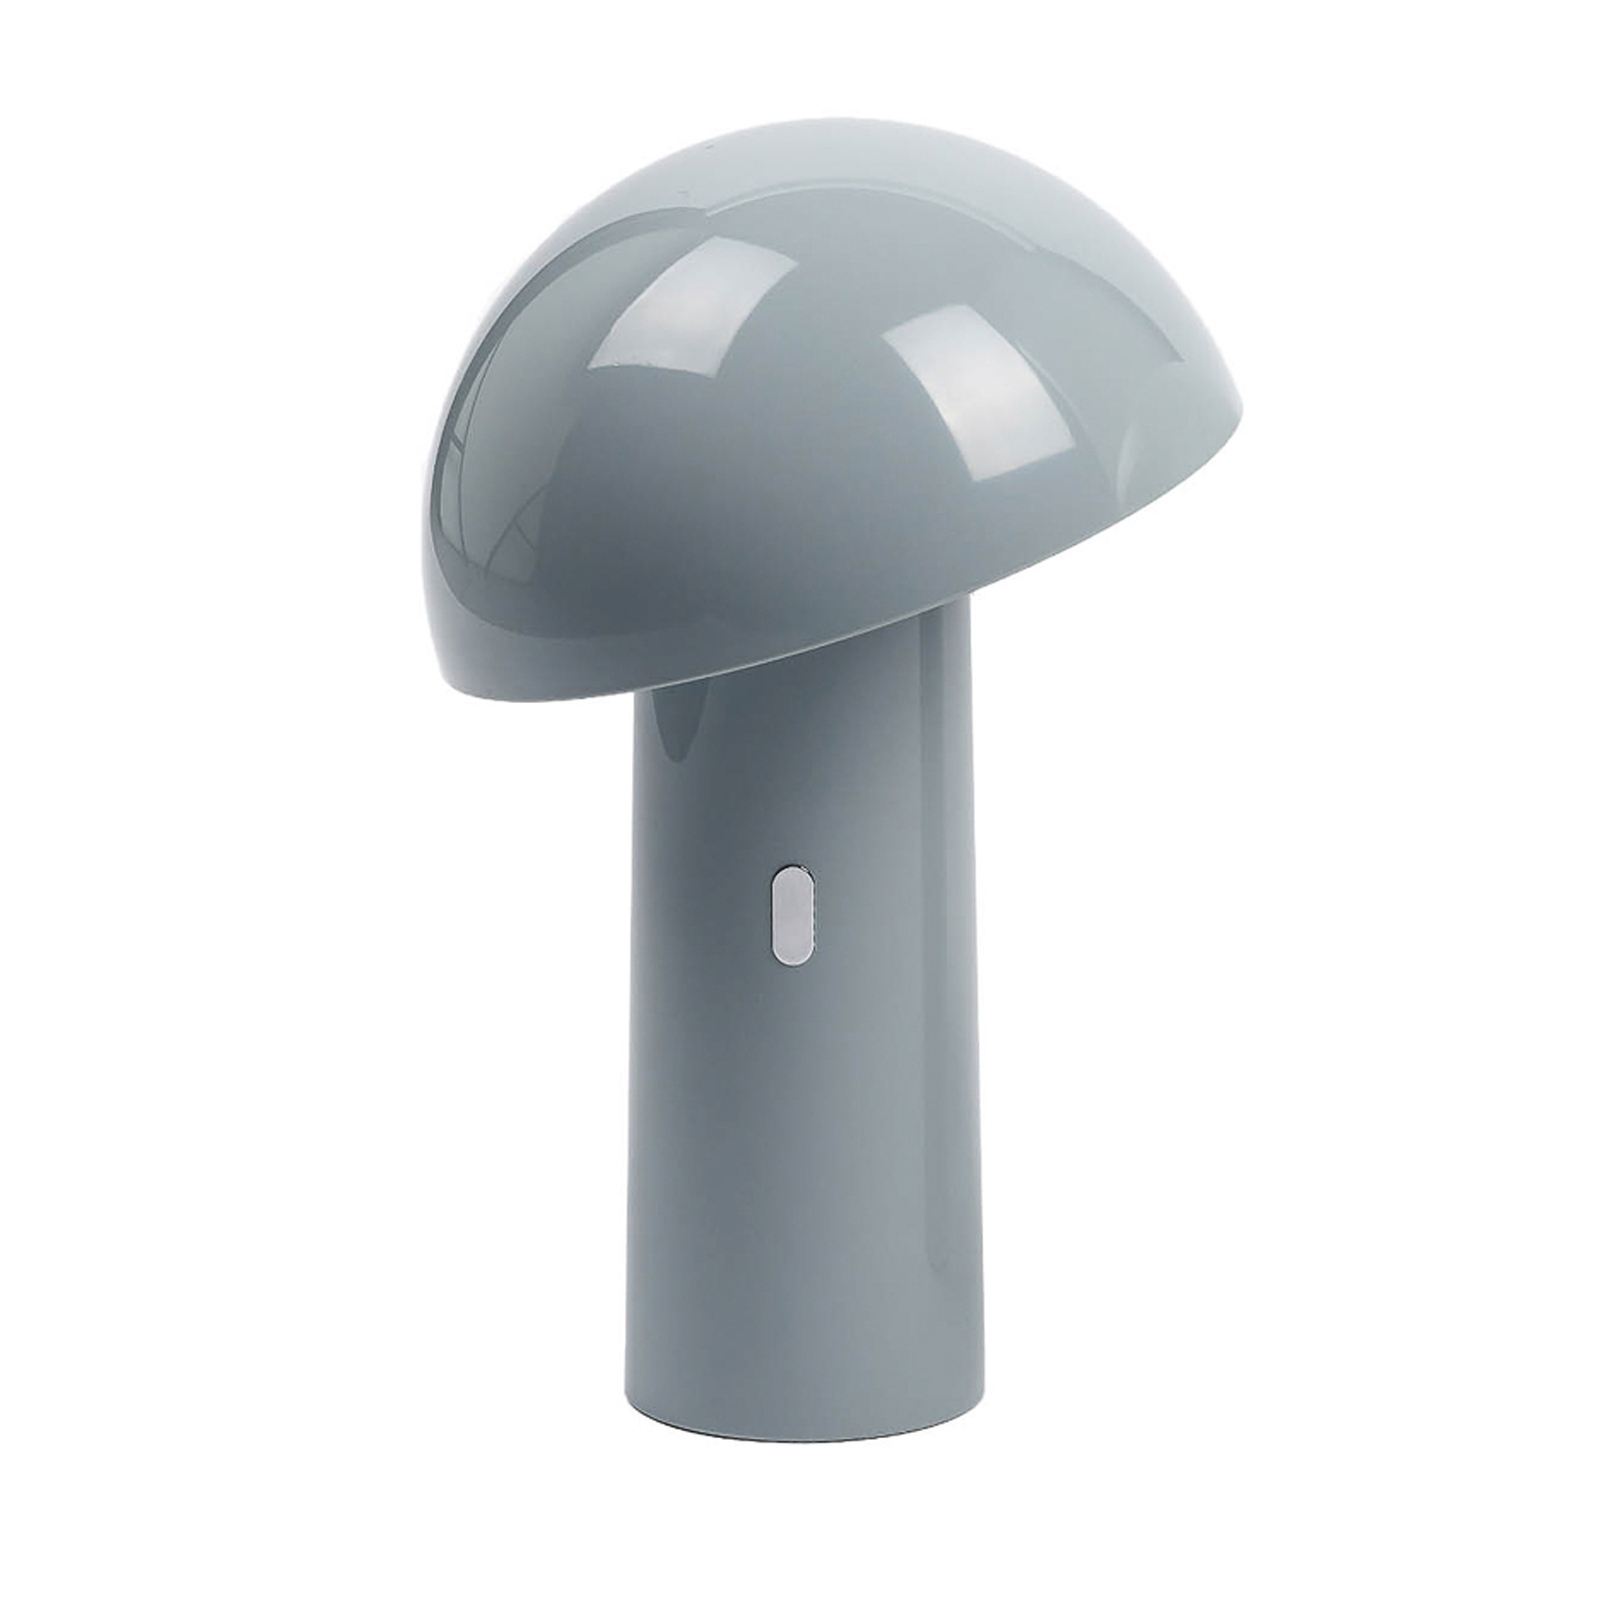 "Aluminor Capsule" LED stalinė lempa, mobili, pilka